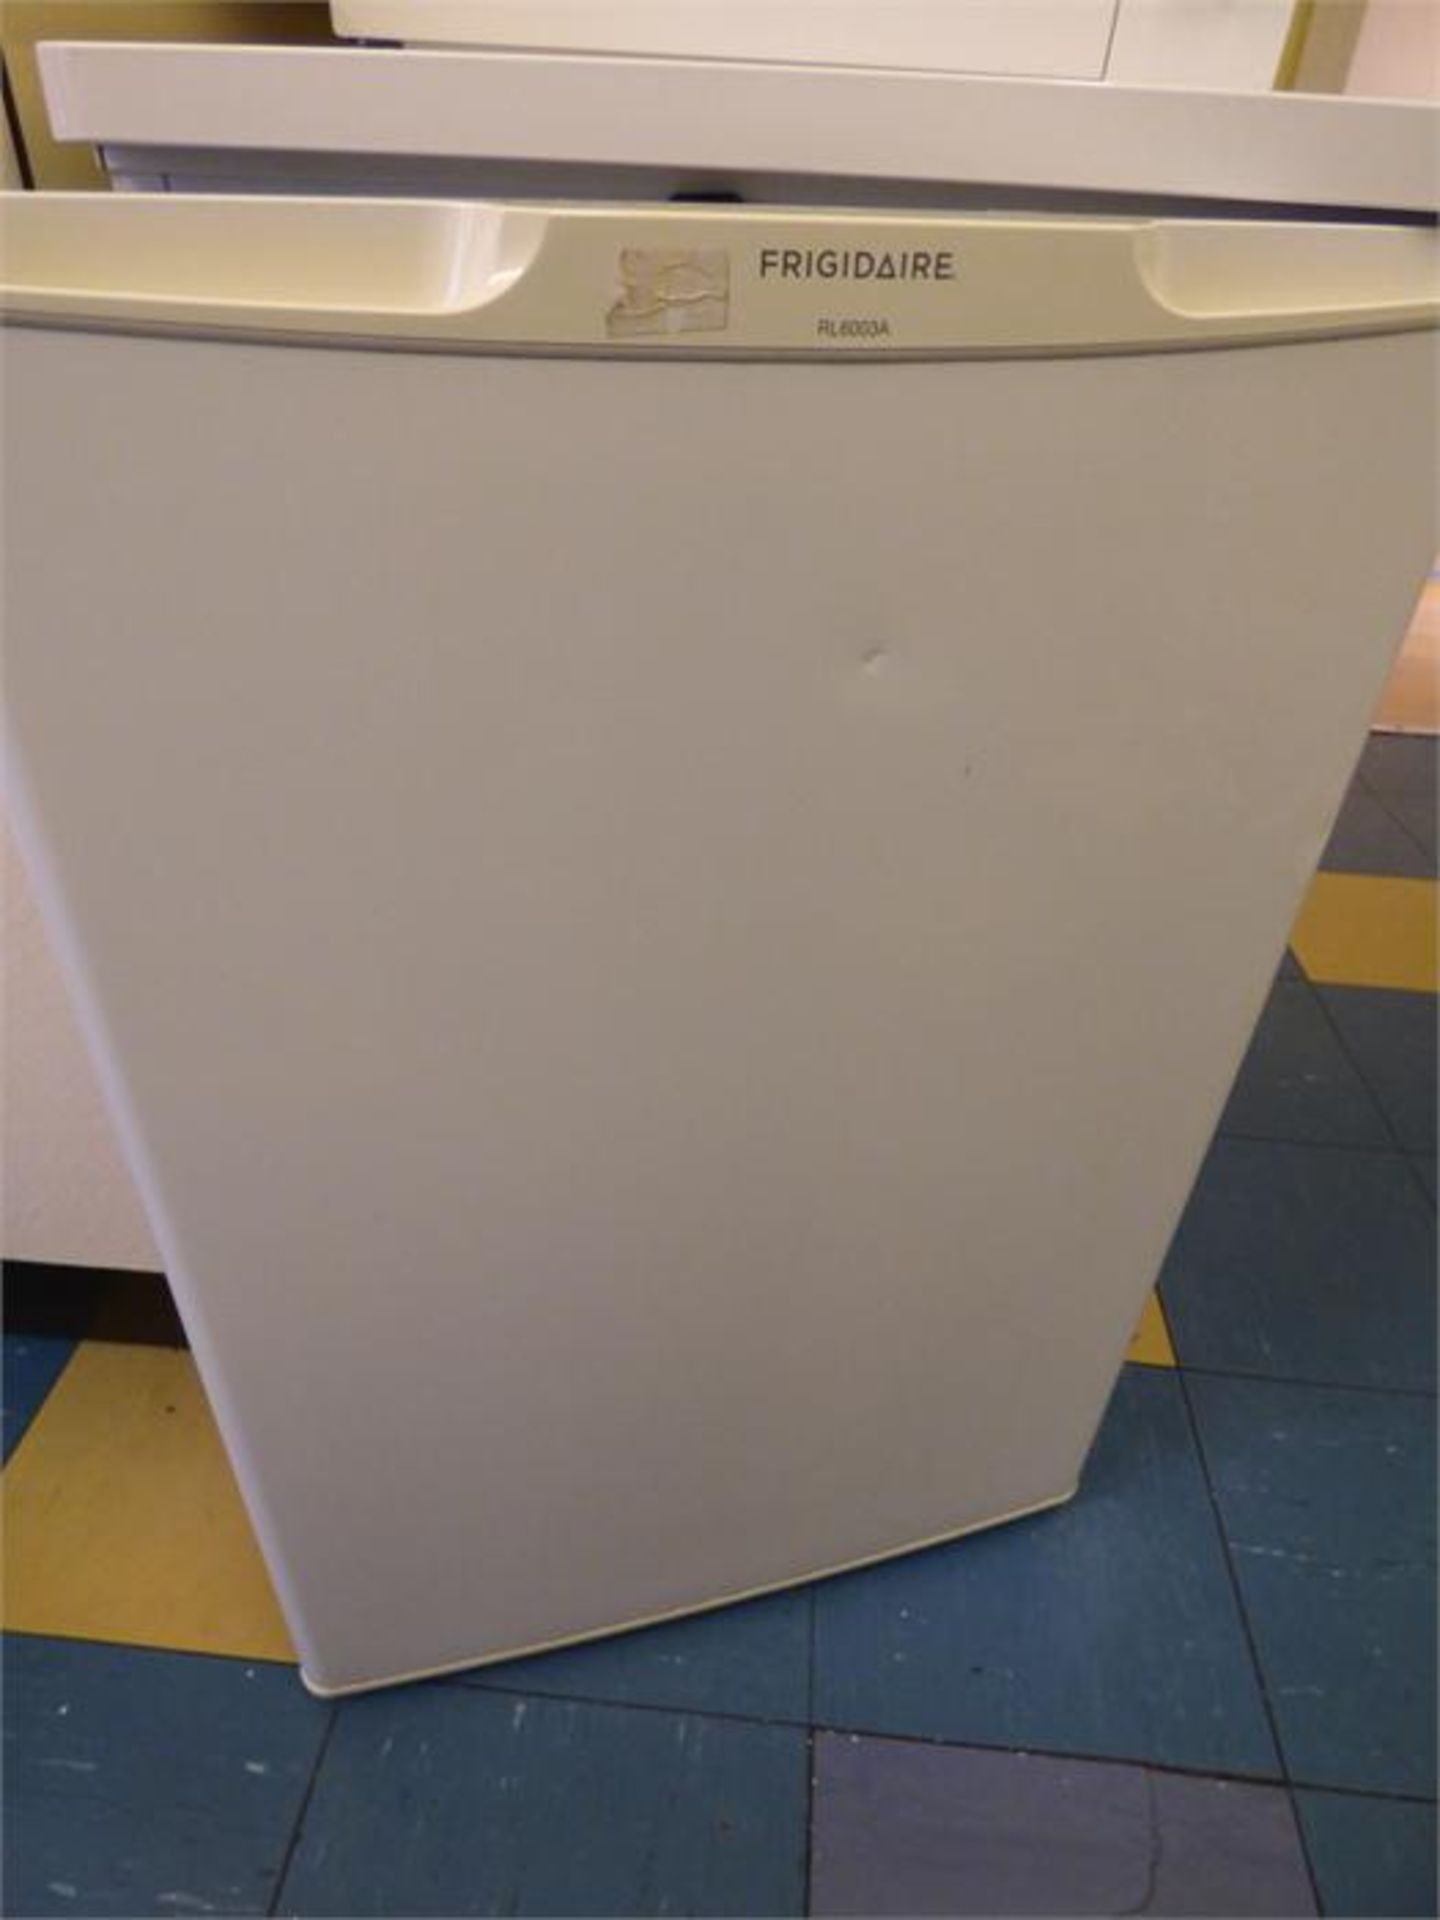 Frigidaire Undercounter Refrigerator Model:RL6003A